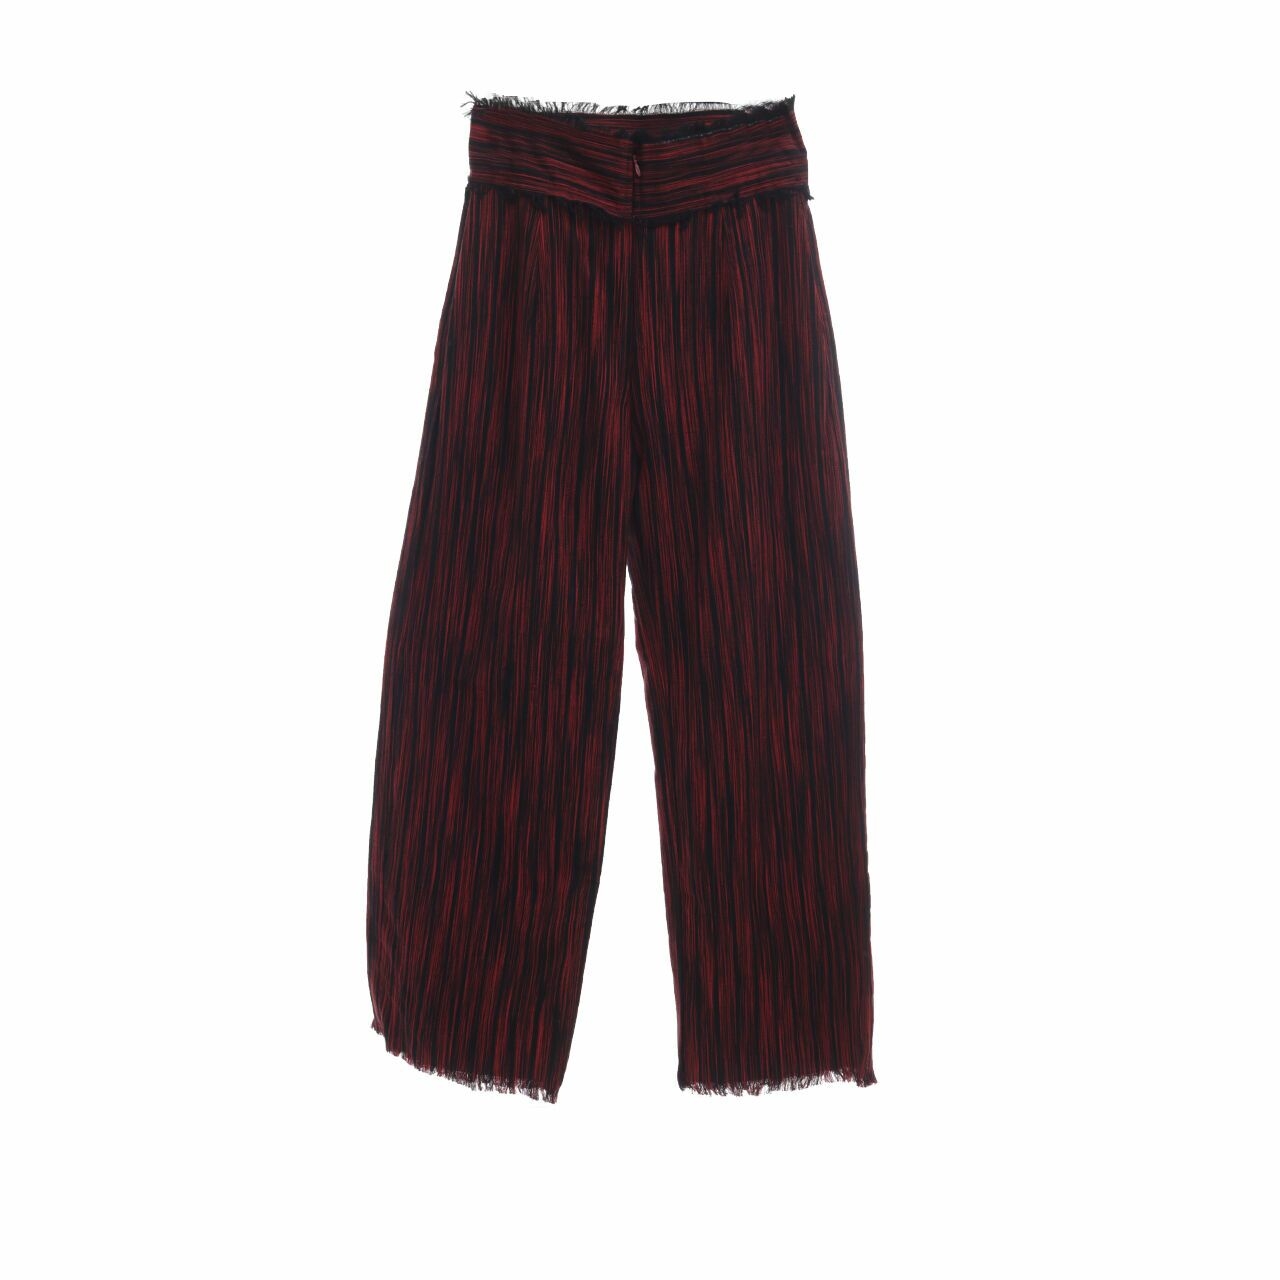 Oemah Etnik Black & Red Unfinished Long Pants